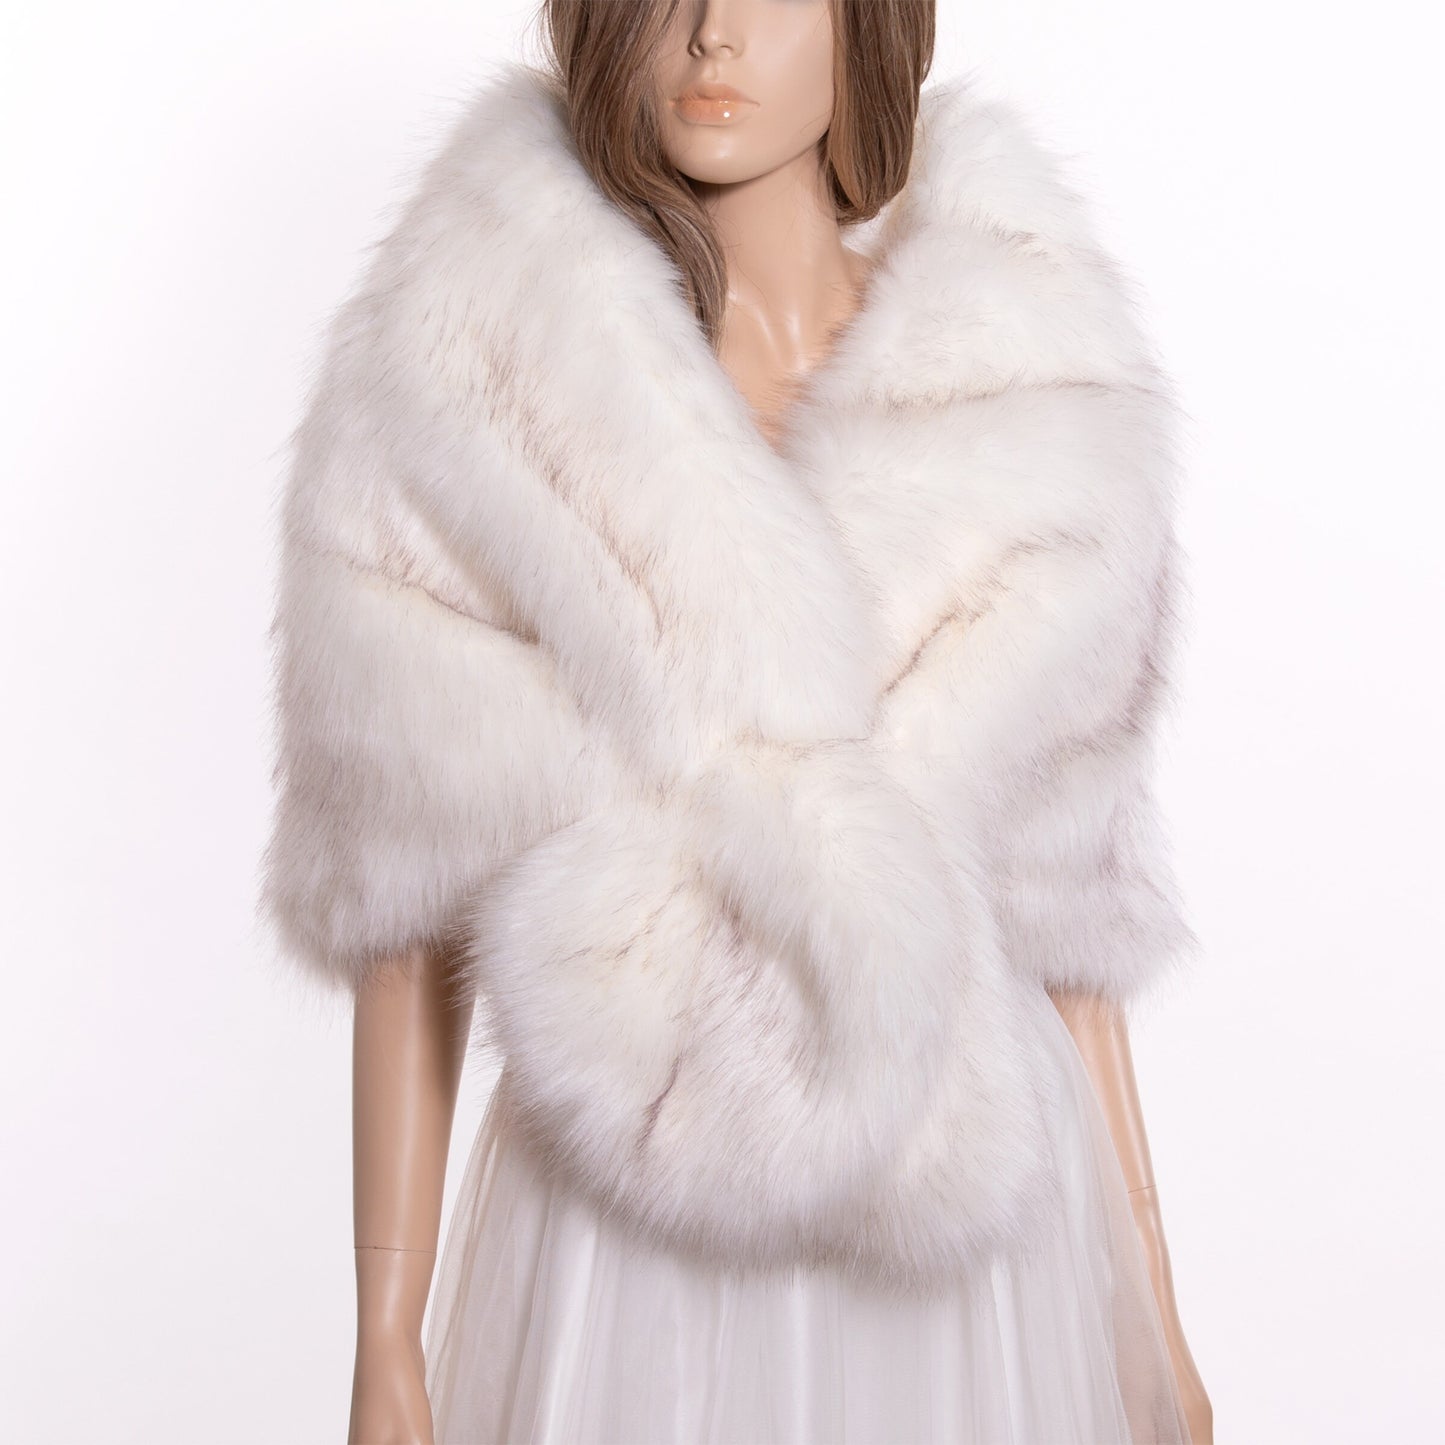 20" wide faux fur shawl light ivory faux fur wrap faux fur shrug wedding faux fur shawl bridal faux fur stole bridal wrap wedding cape